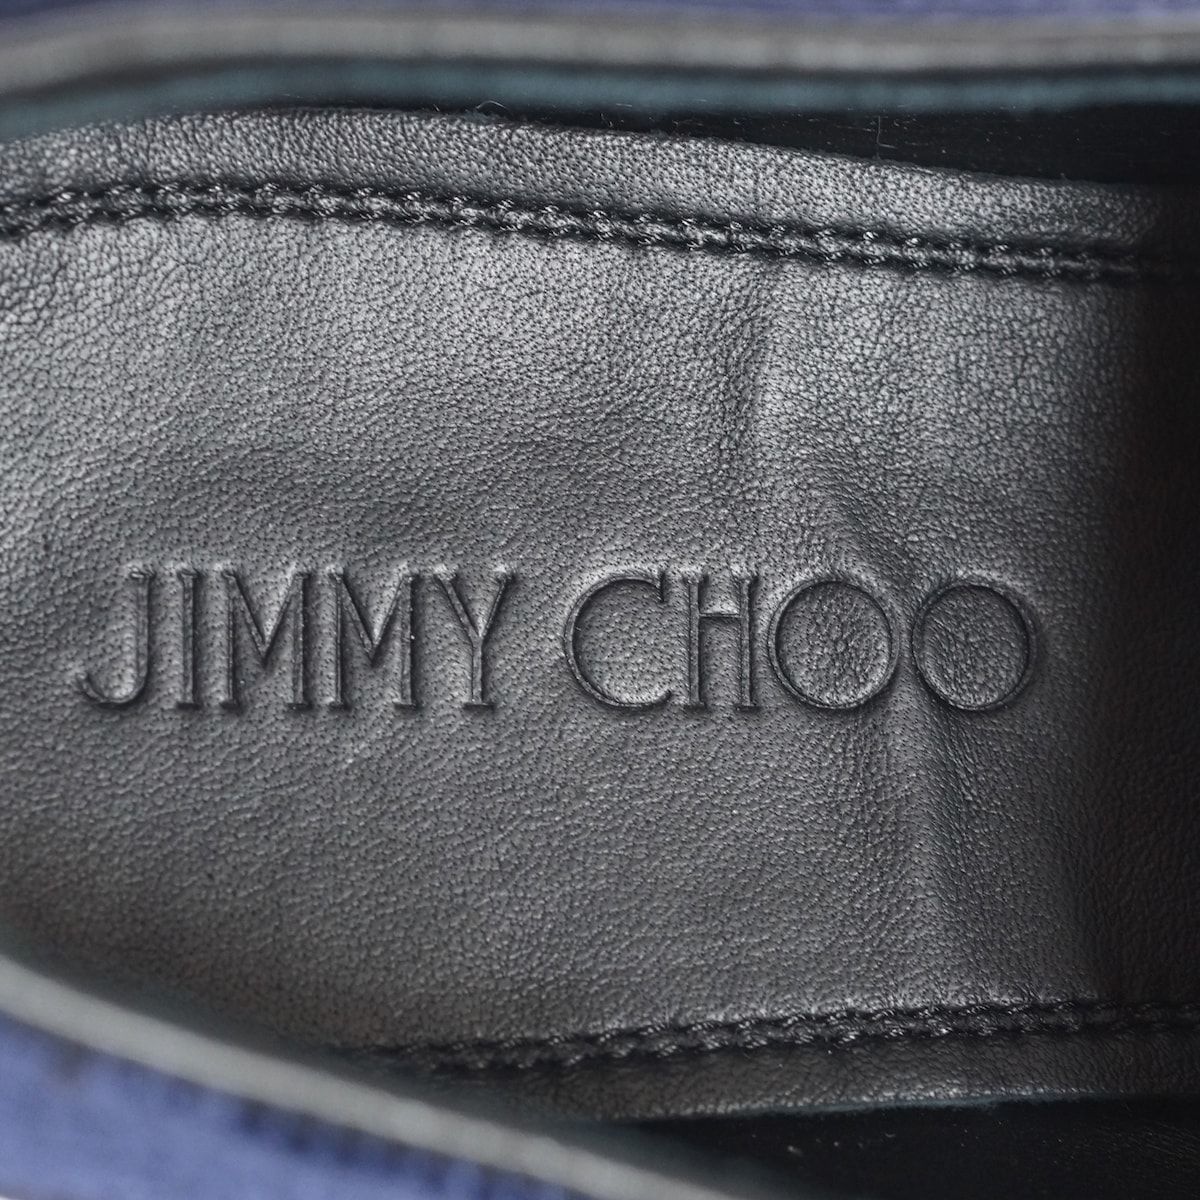 JIMMY CHOO(ジミーチュウ) シューズ 44 メンズ美品 - ダークネイビー ...